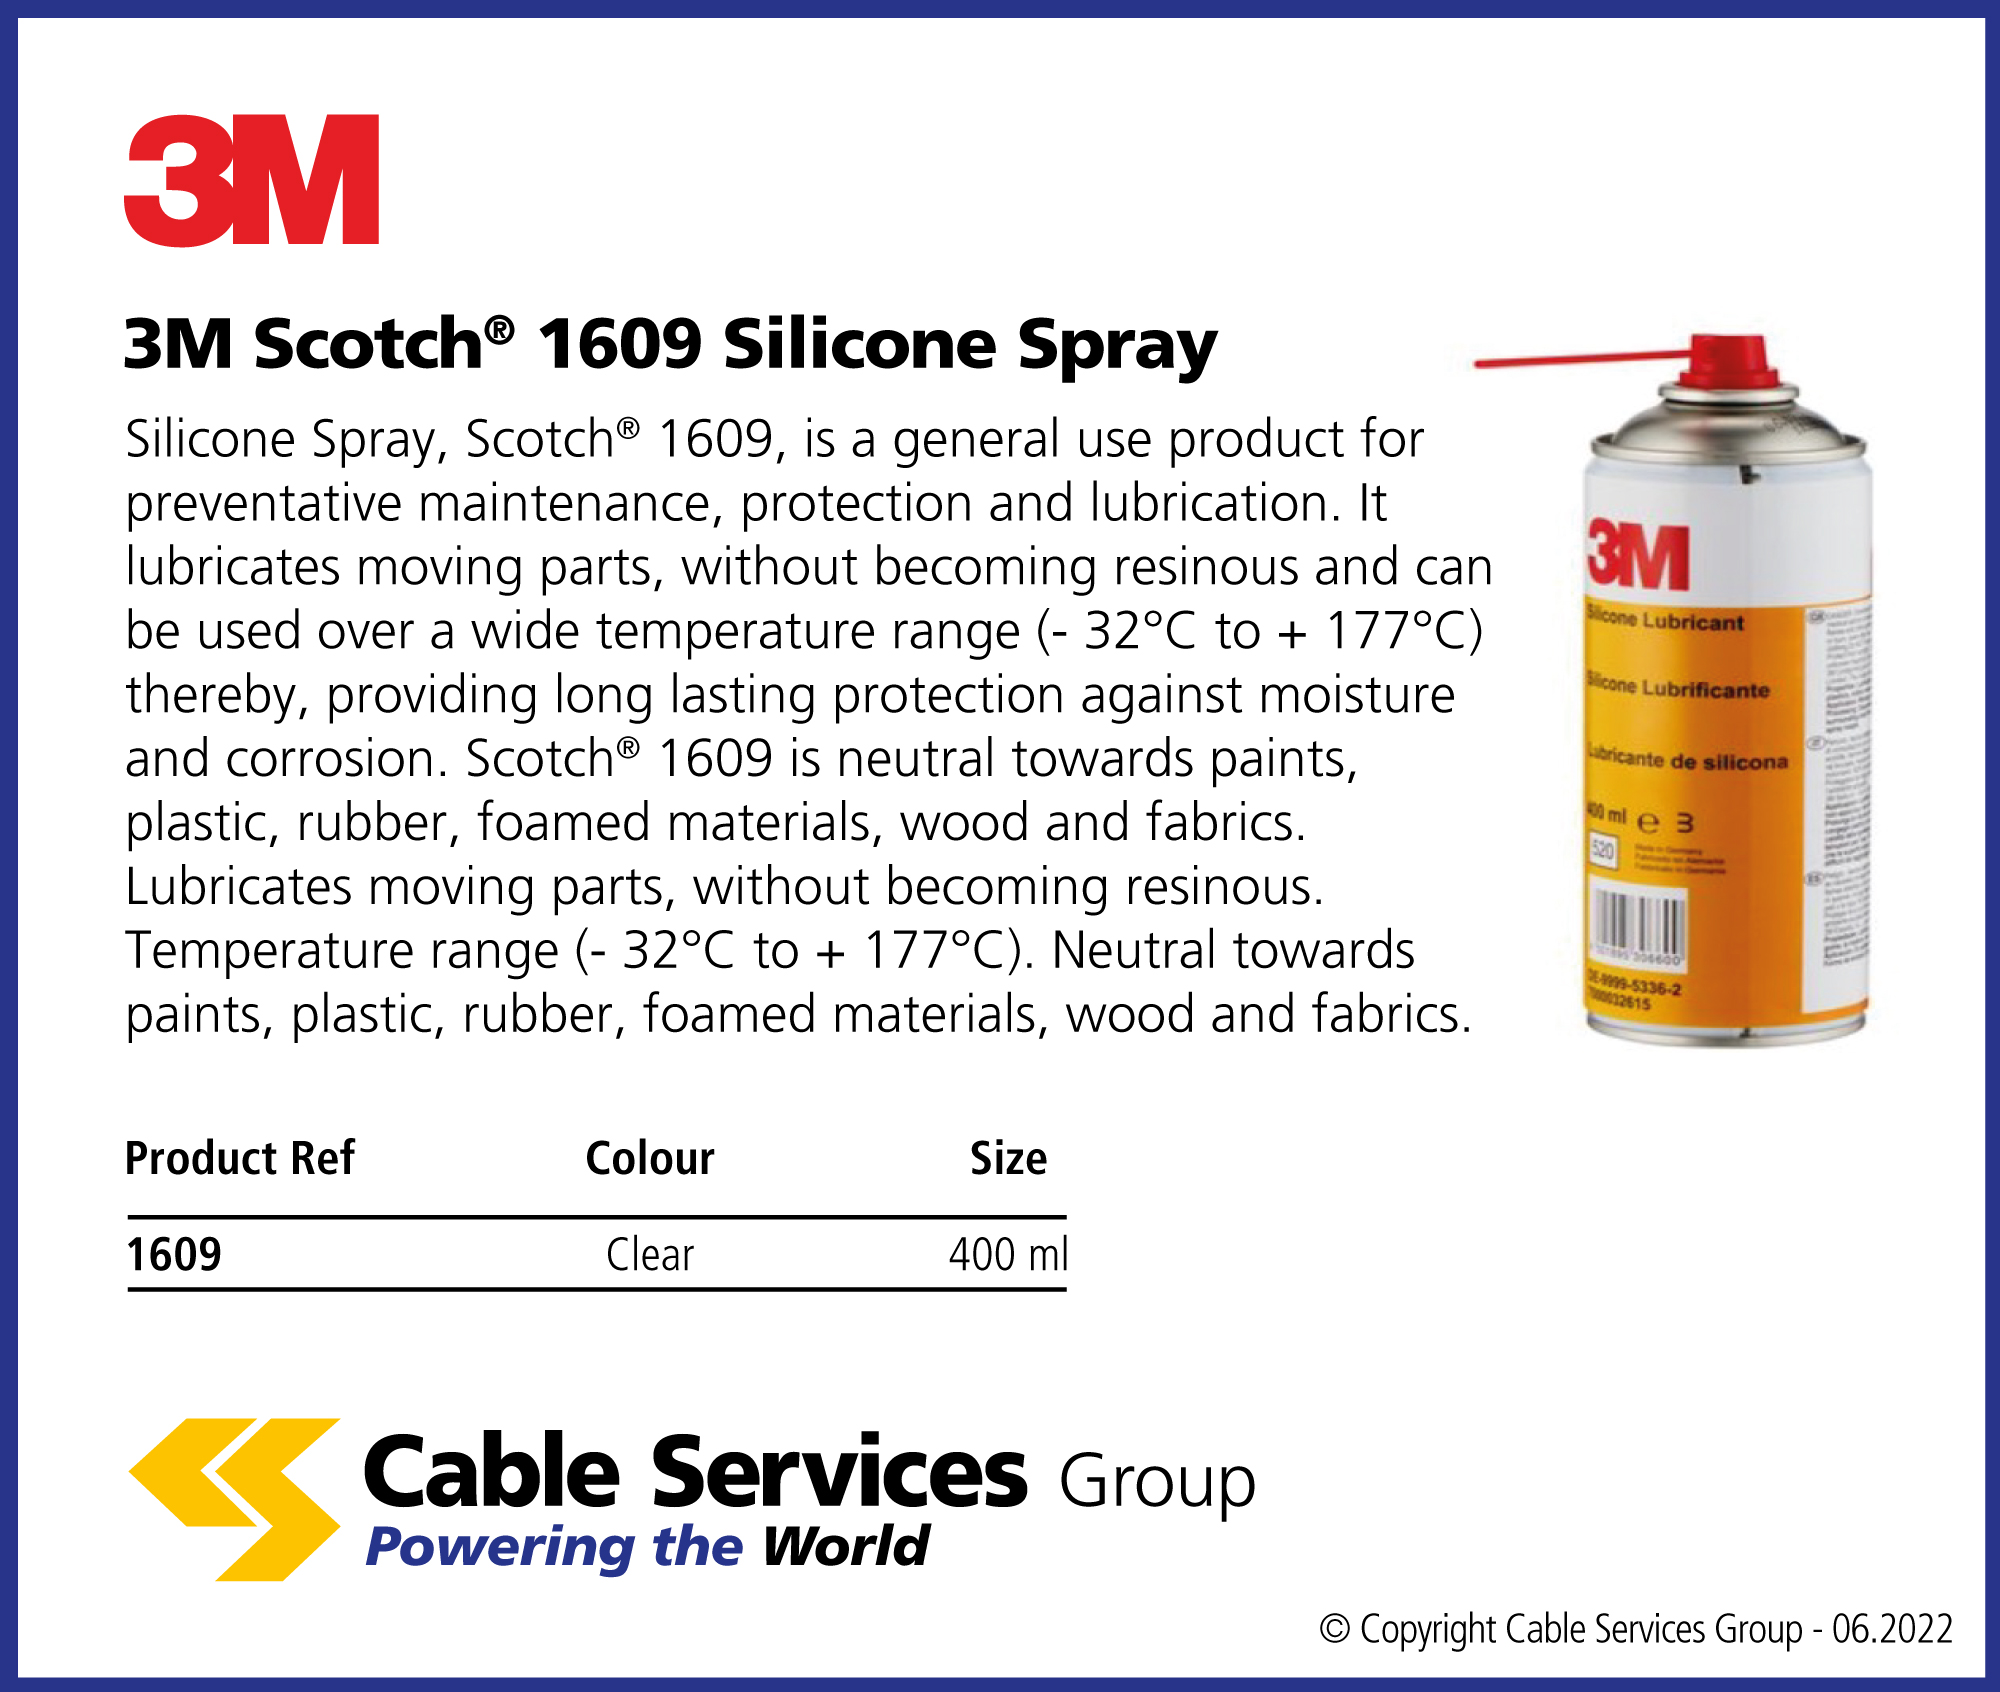 3M Scotch 1609 Silicone Spray - Cable Services